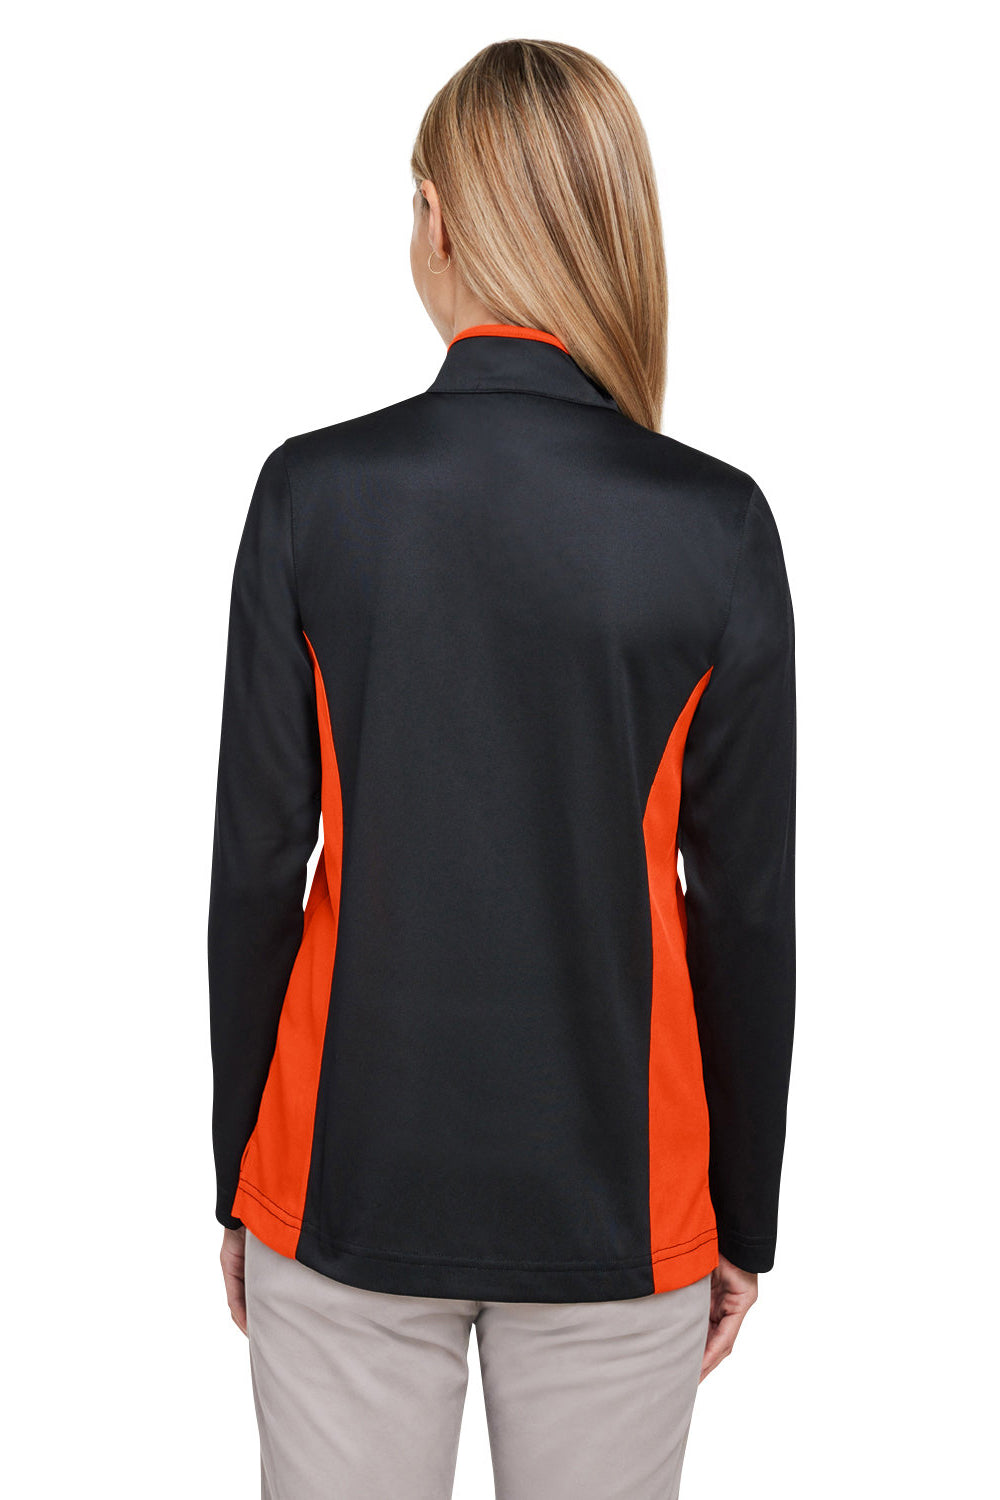 Harriton M786W Womens Flash Performance Moisture Wicking Colorblock 1/4 Zip Sweatshirt Black/Team Orange Back